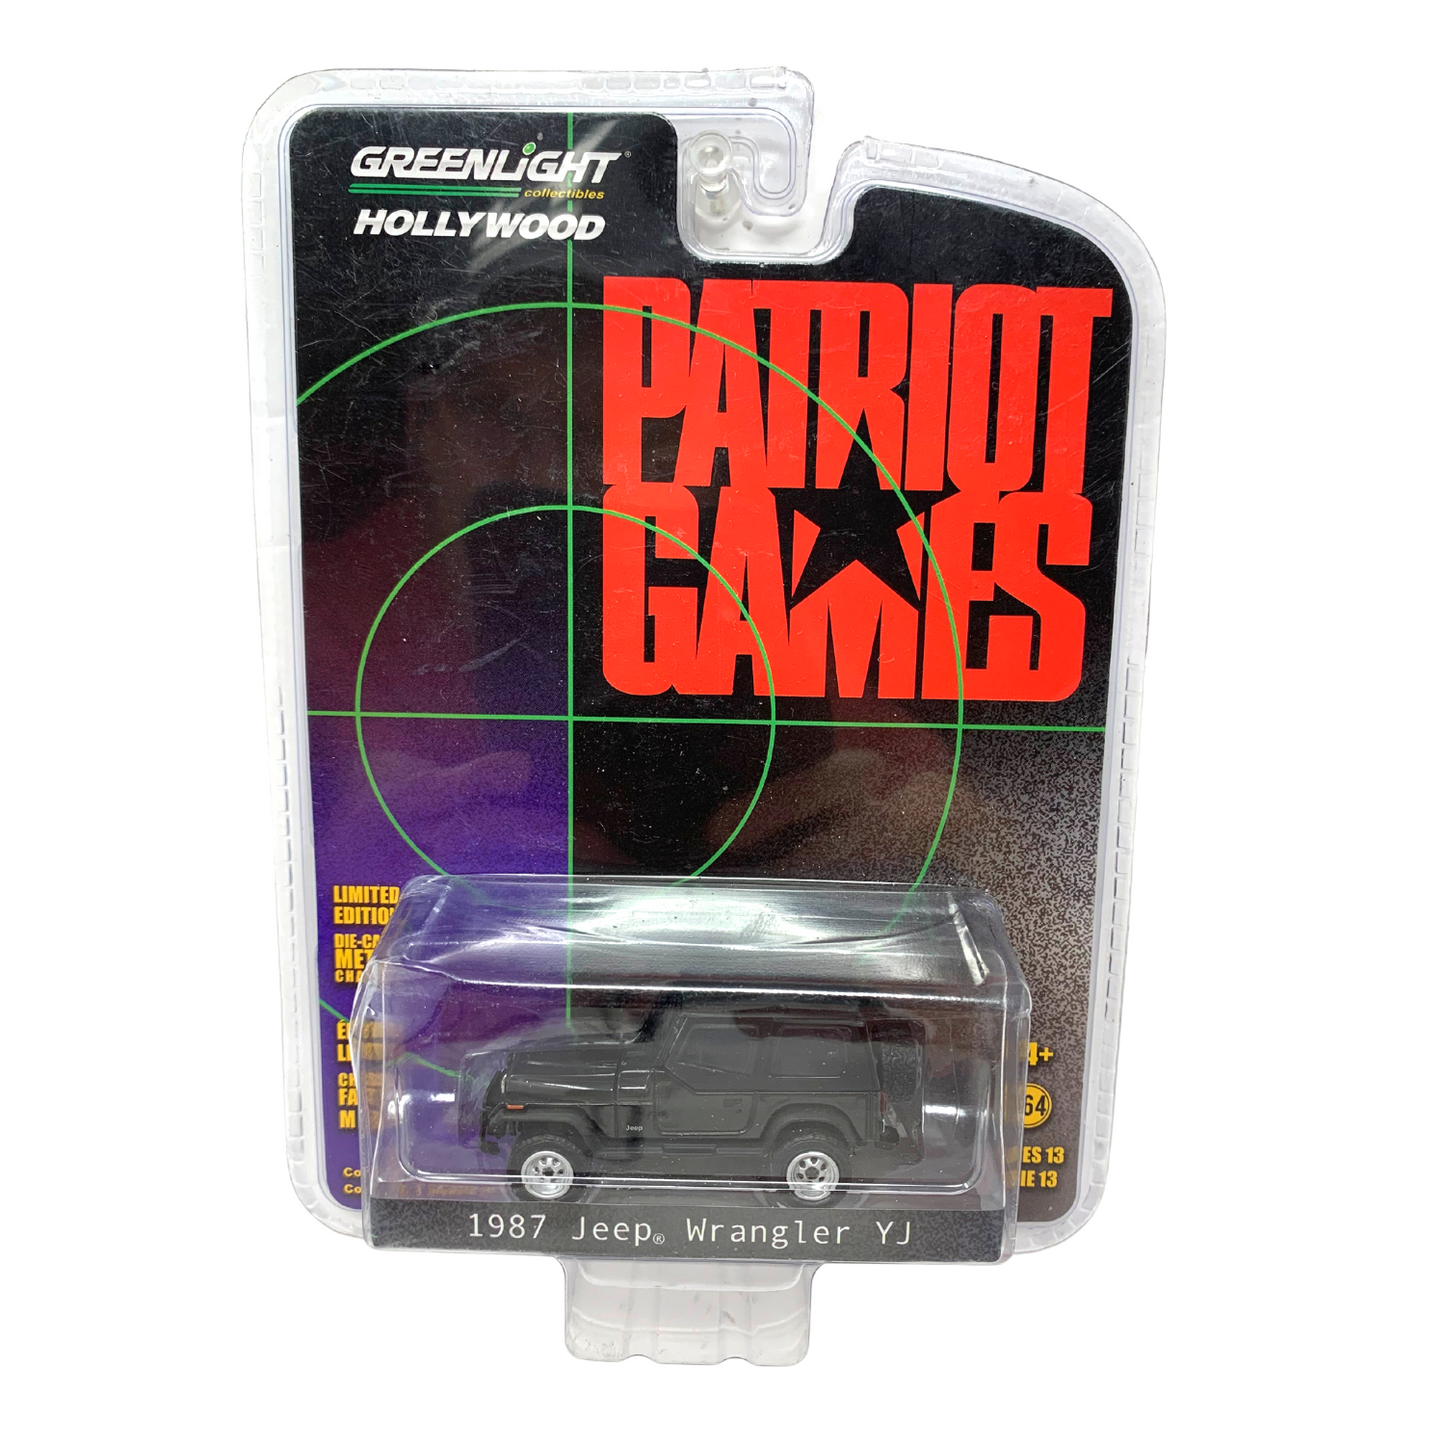 Greenlight Hollywood Patriot Games 1987 Jeep Wrangler YJ 1:64 Diecast